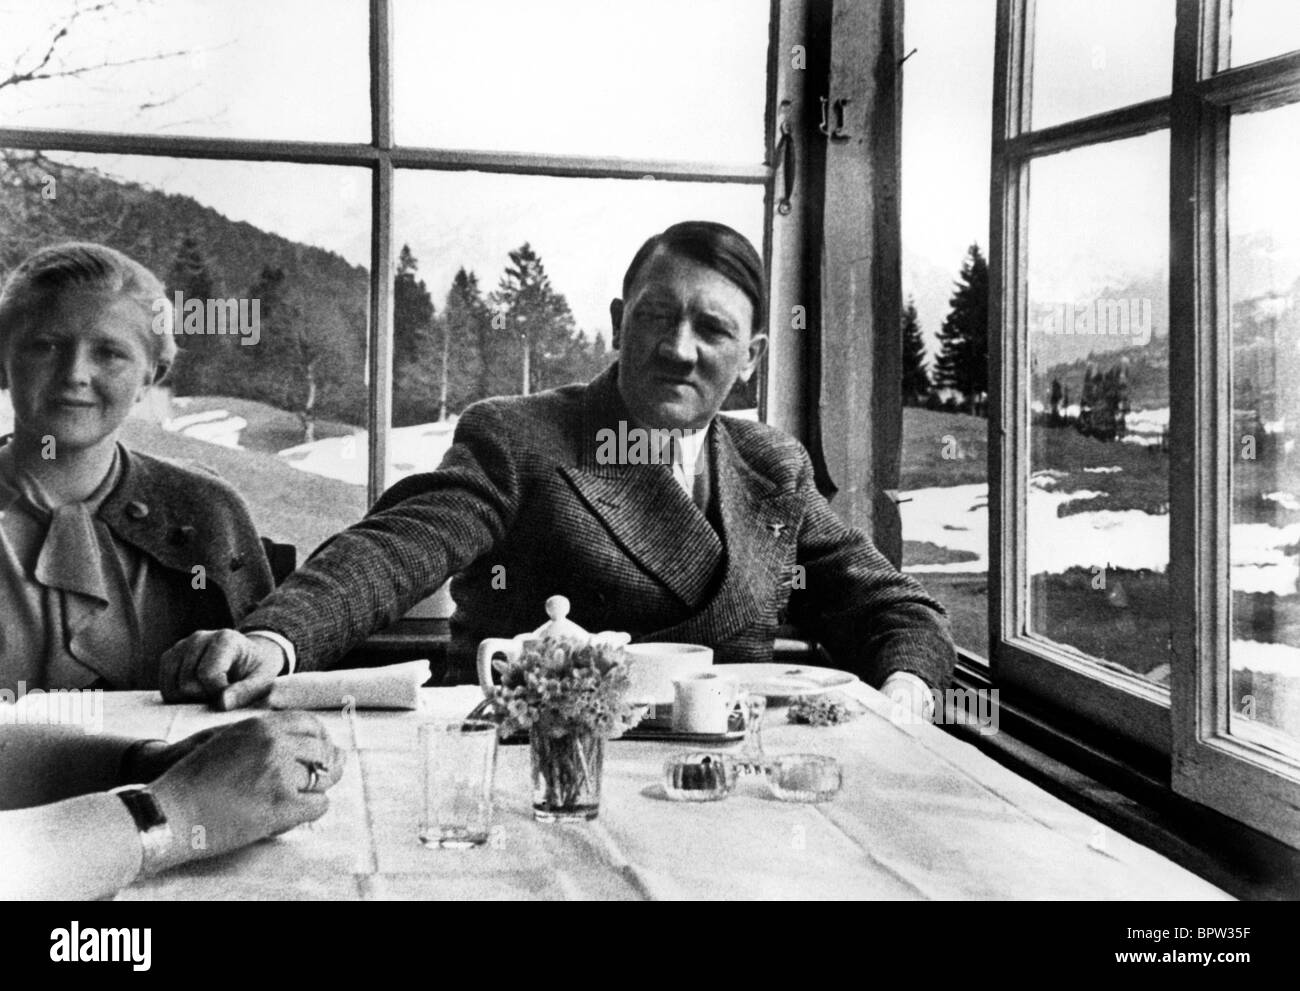 ADOLF HITLER, NAZI LEADER, 1940 Stock Photo